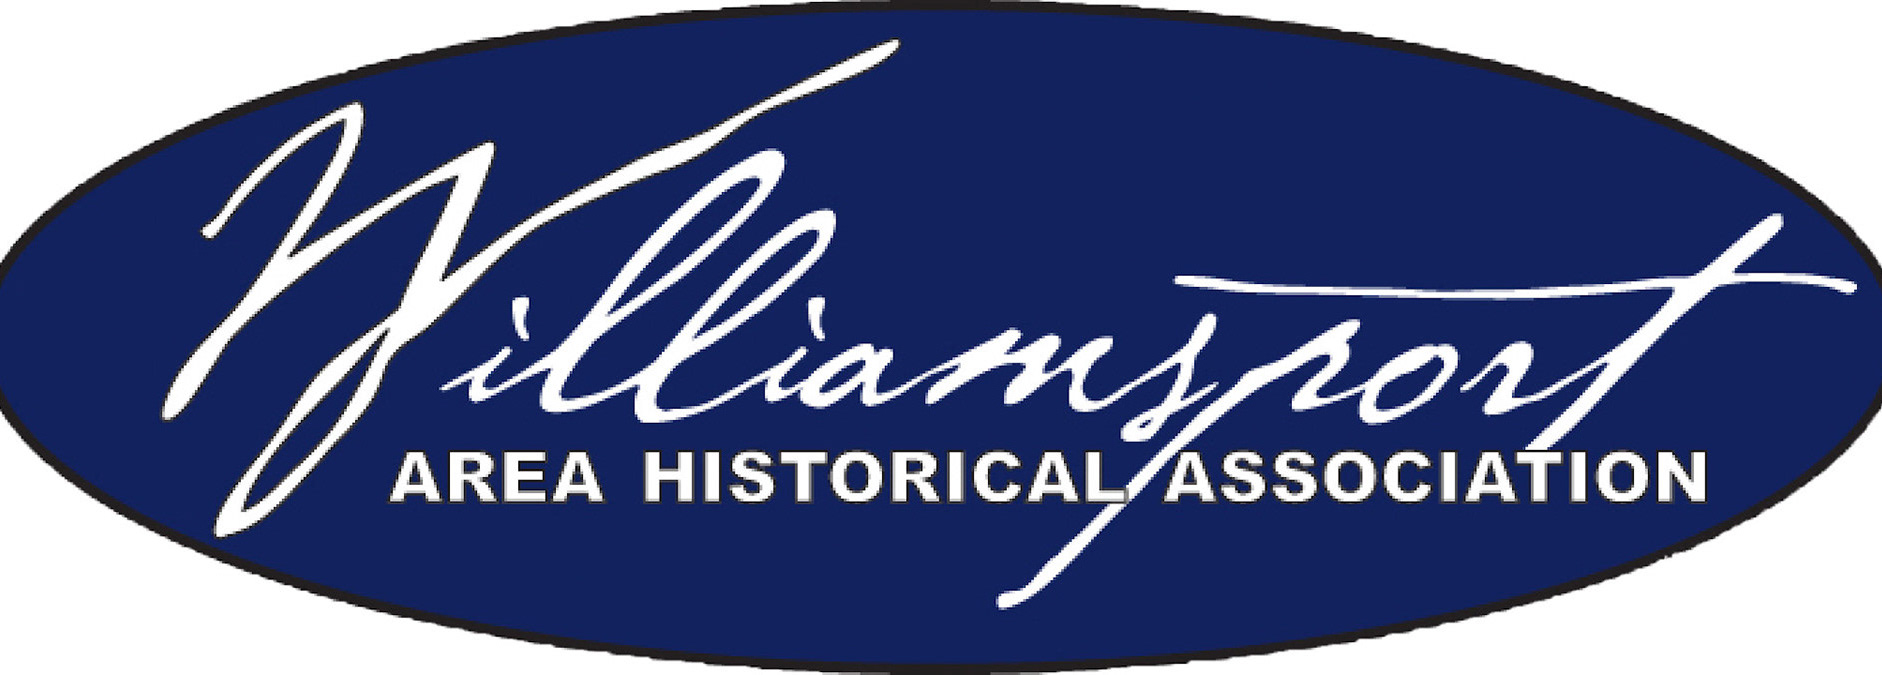 Williamsport Area Historical Association